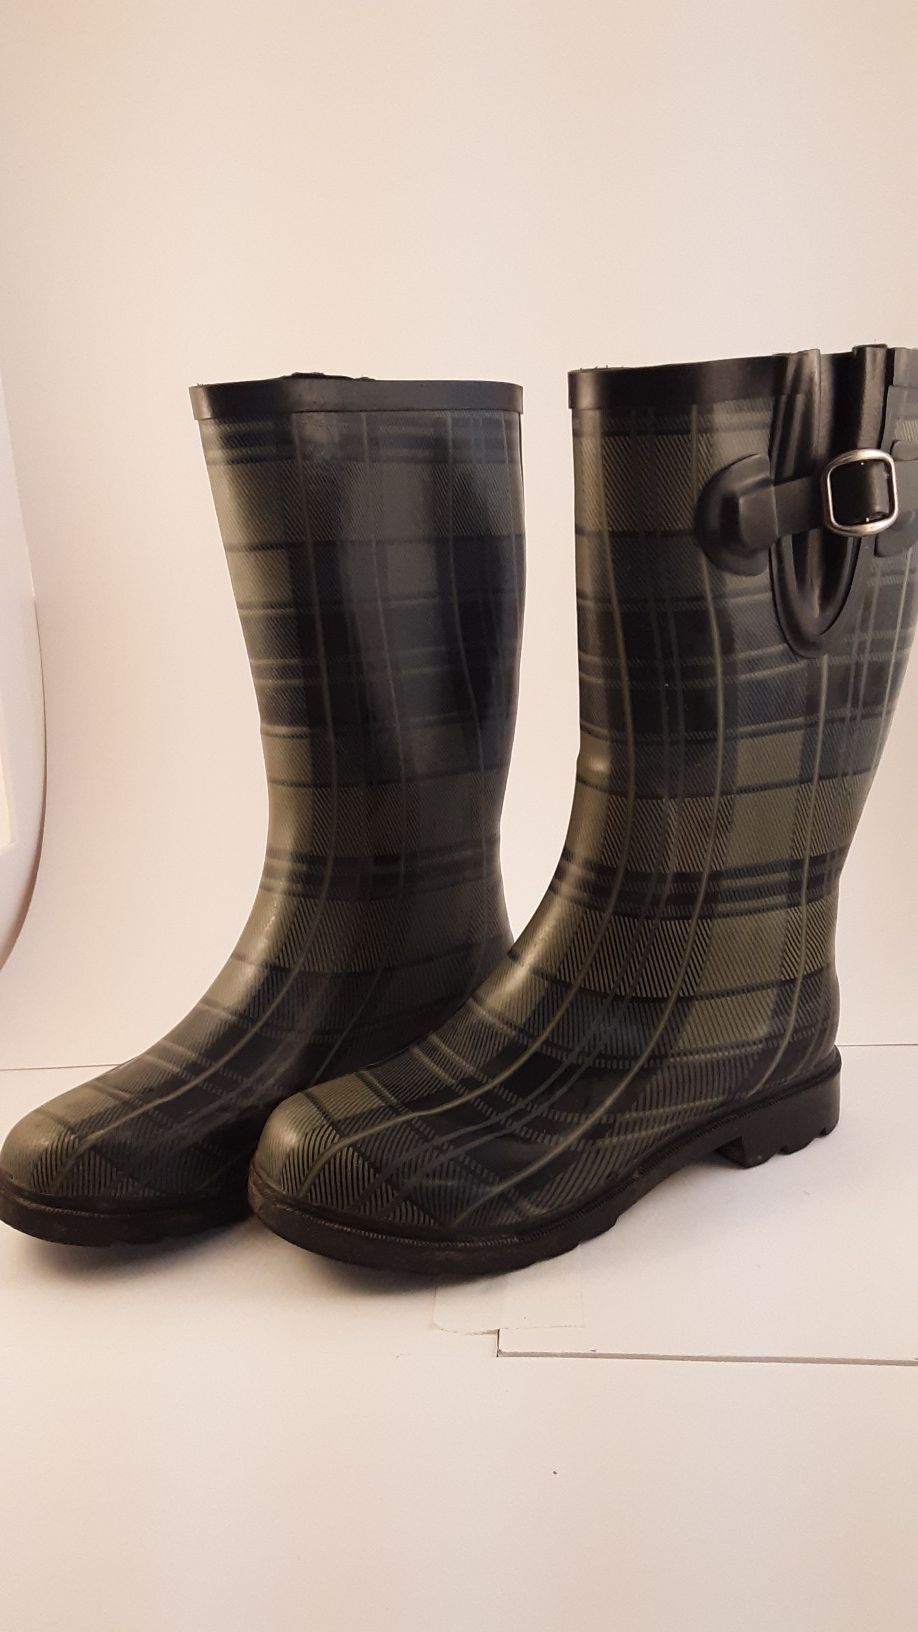 Size 7 womens Northside rain boots